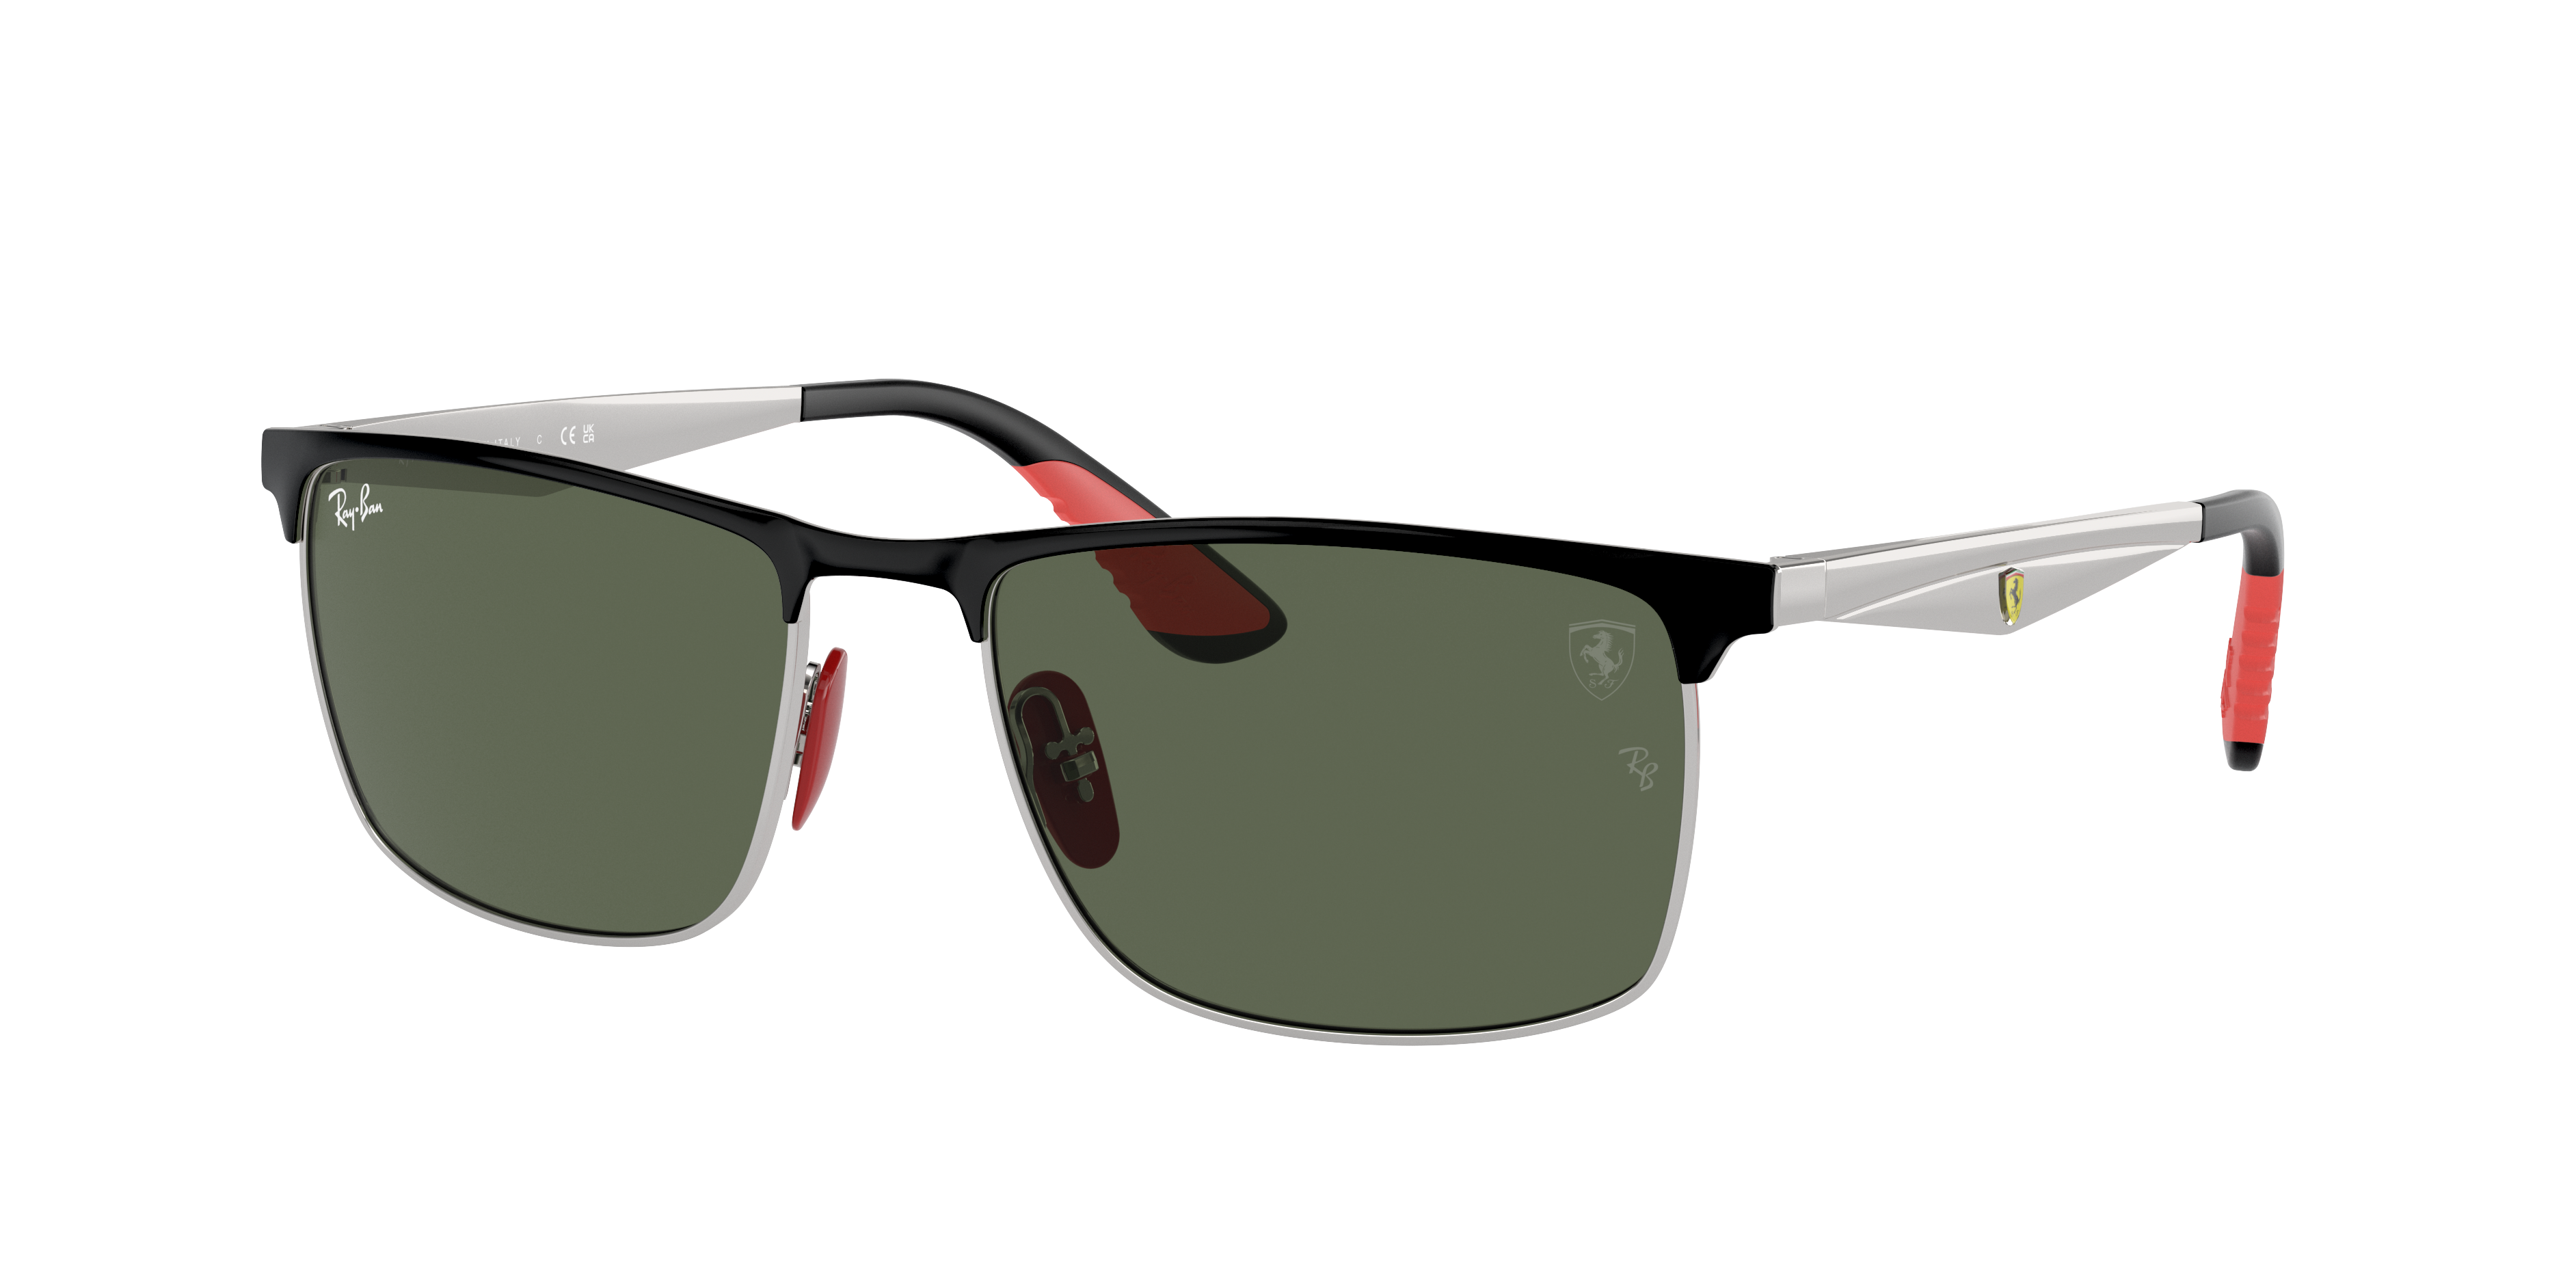 RAY-BAN RB3726M Scuderia Ferrari Collection Black On Silver - Unisex  Sunglasses, Dark Green Lens